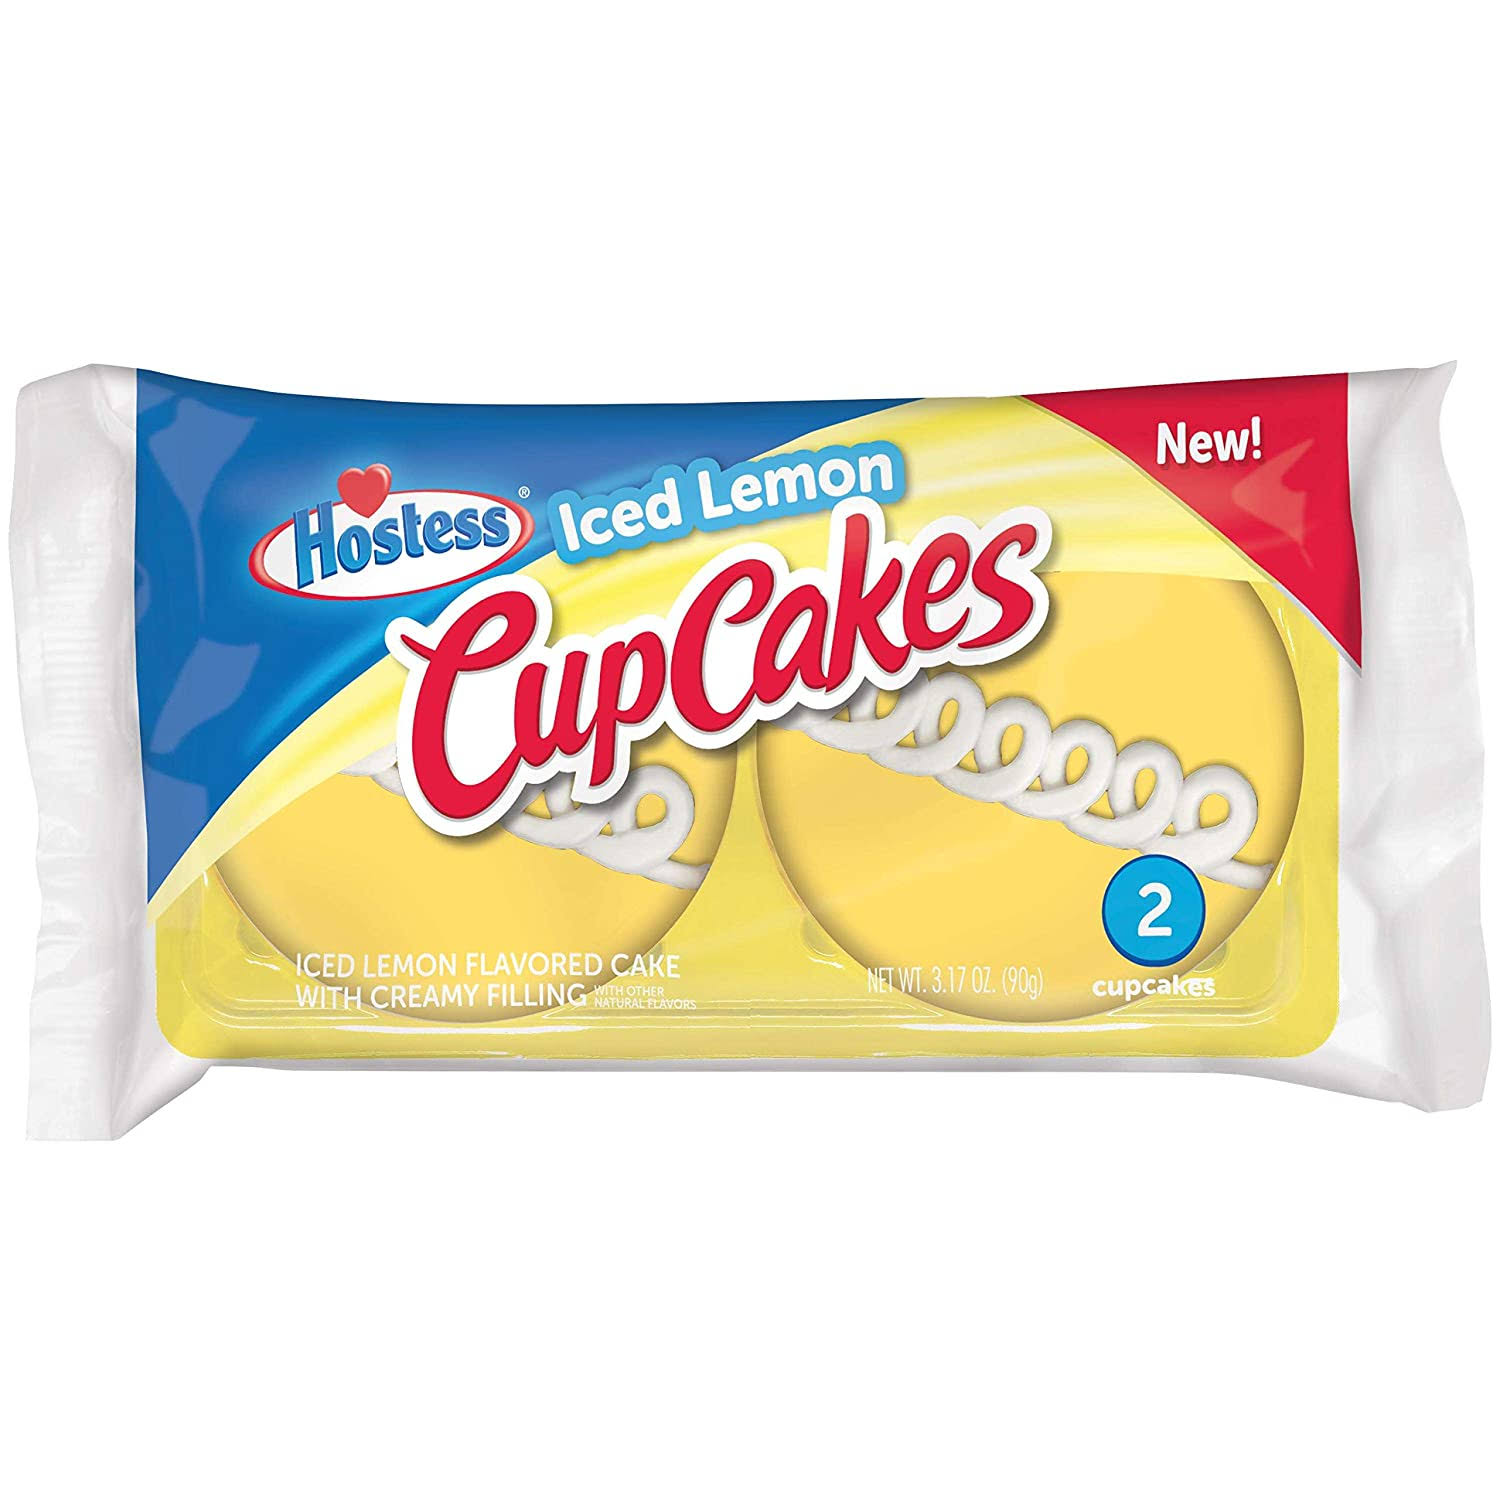 Hostess Iced Lemon Cupcakes - 2 Pack